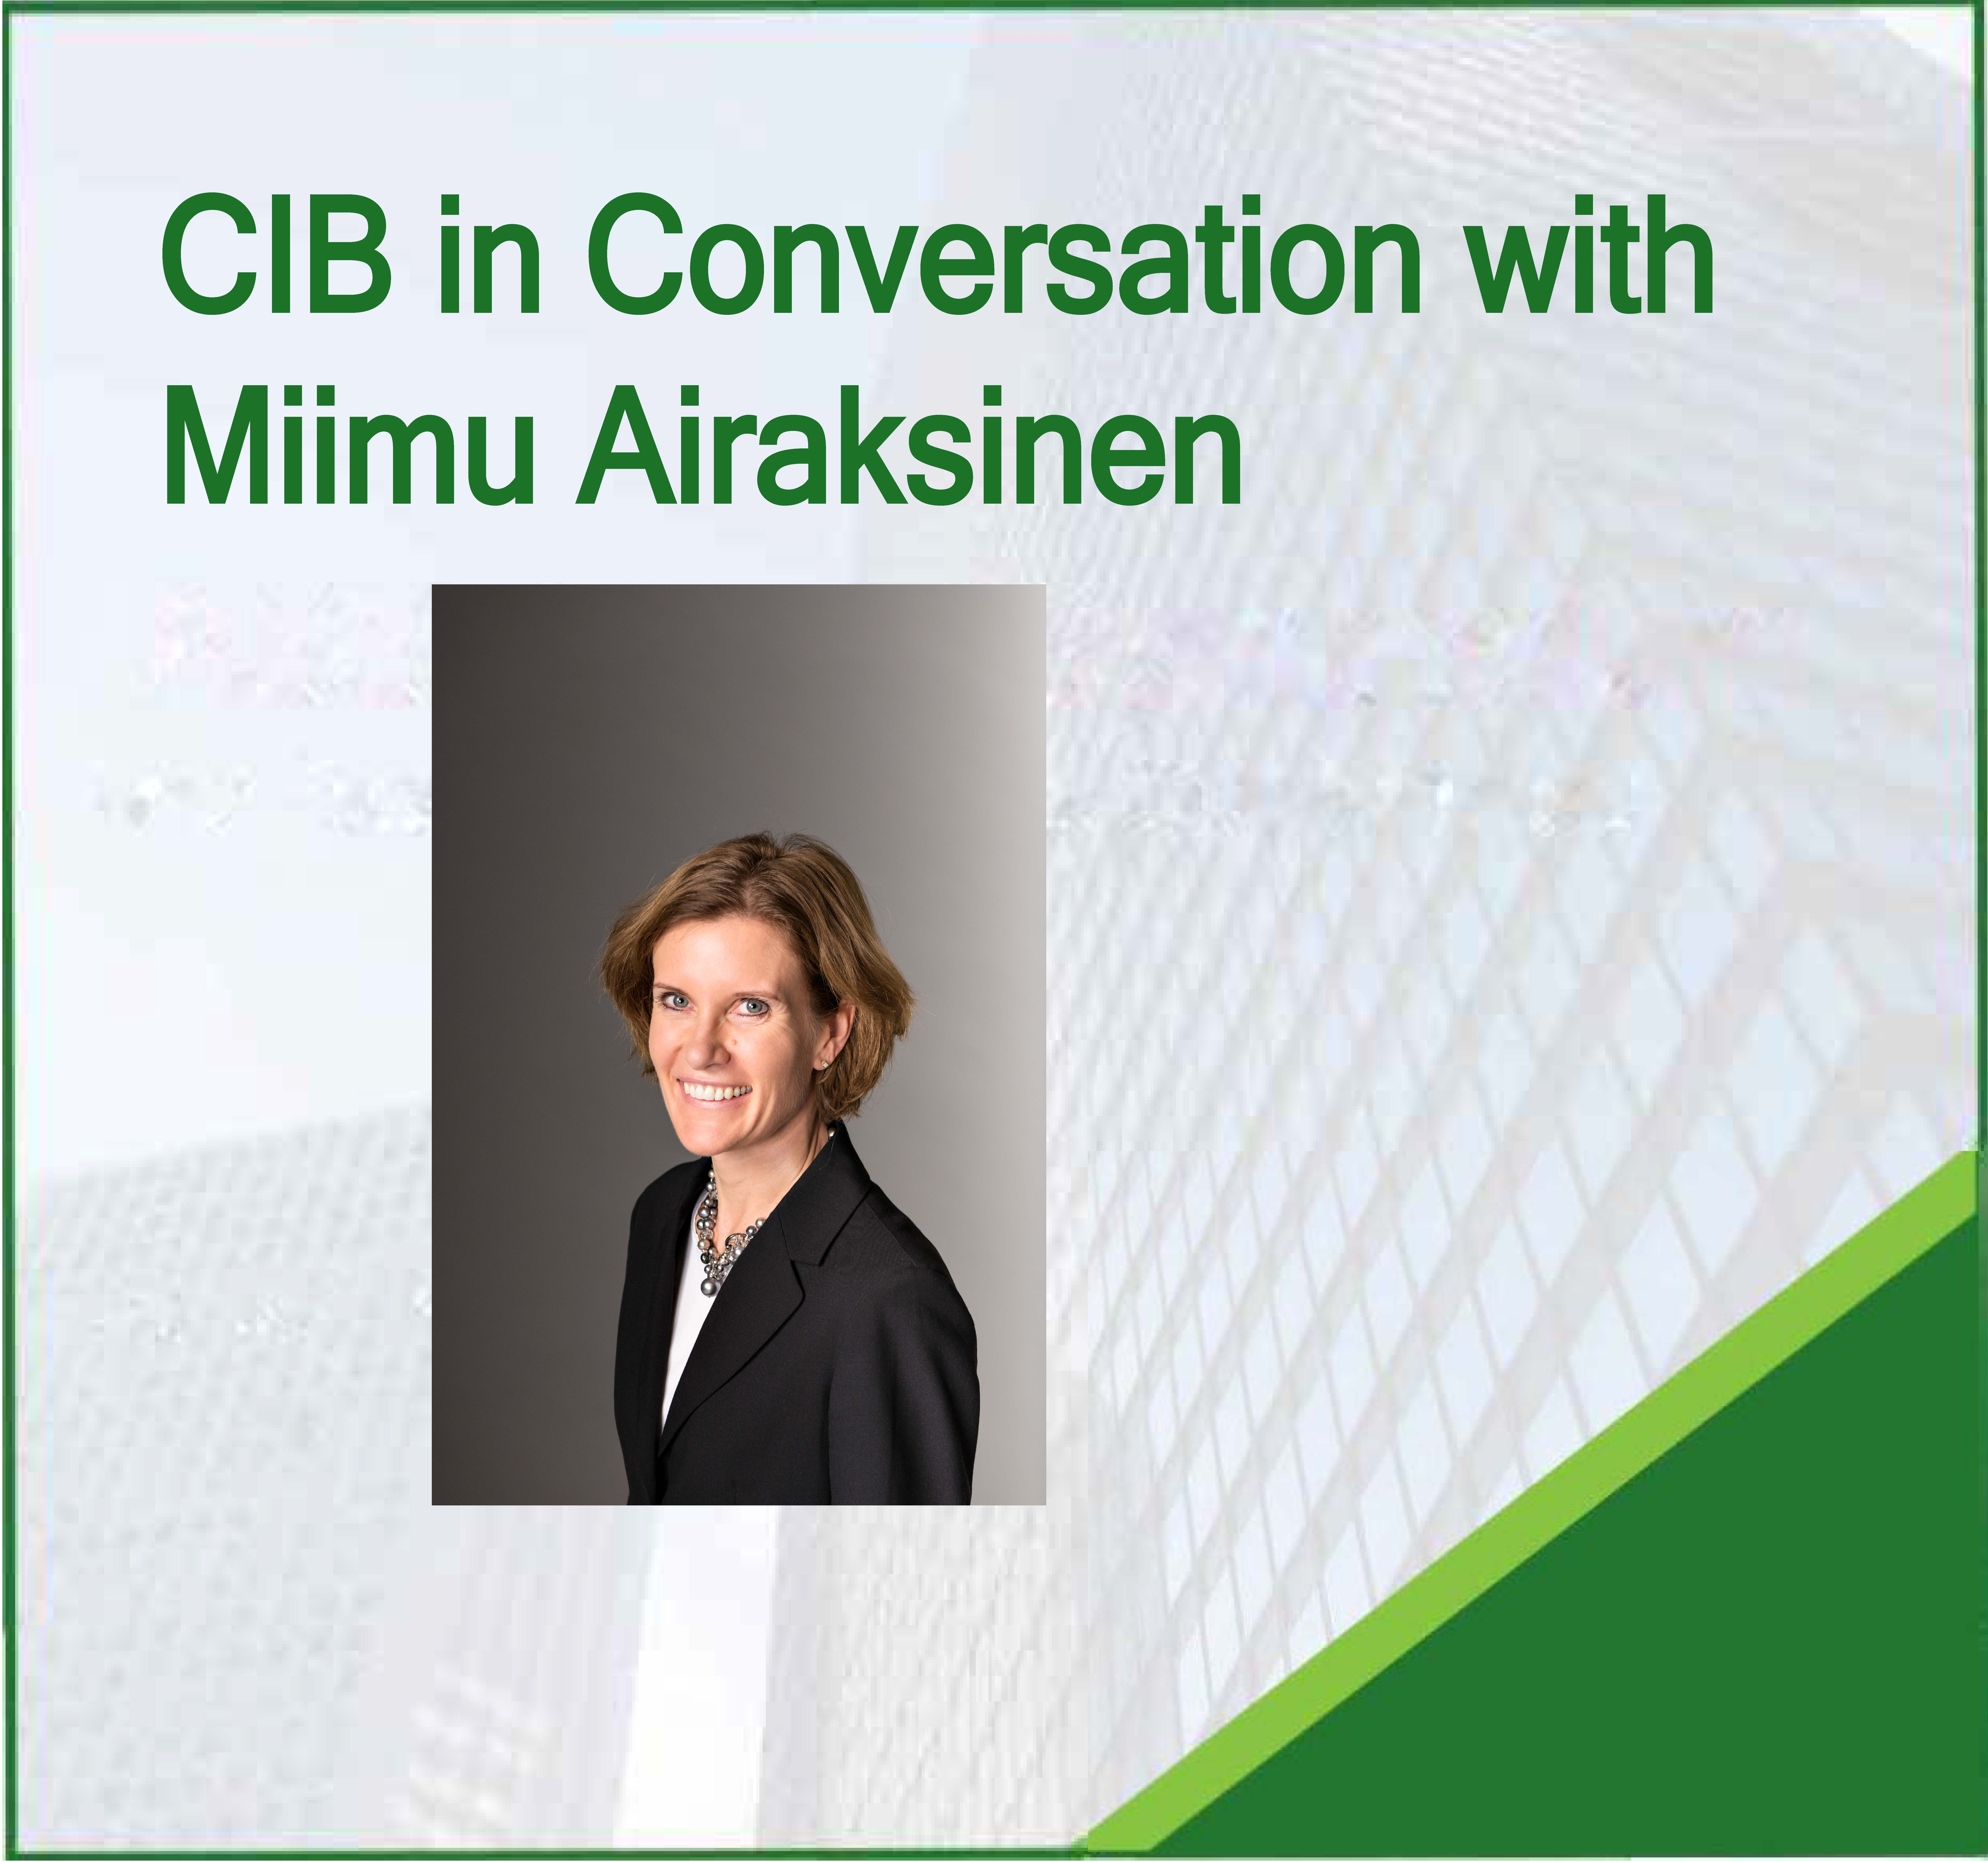 CIB in Conversation with Miimu Airaksinen